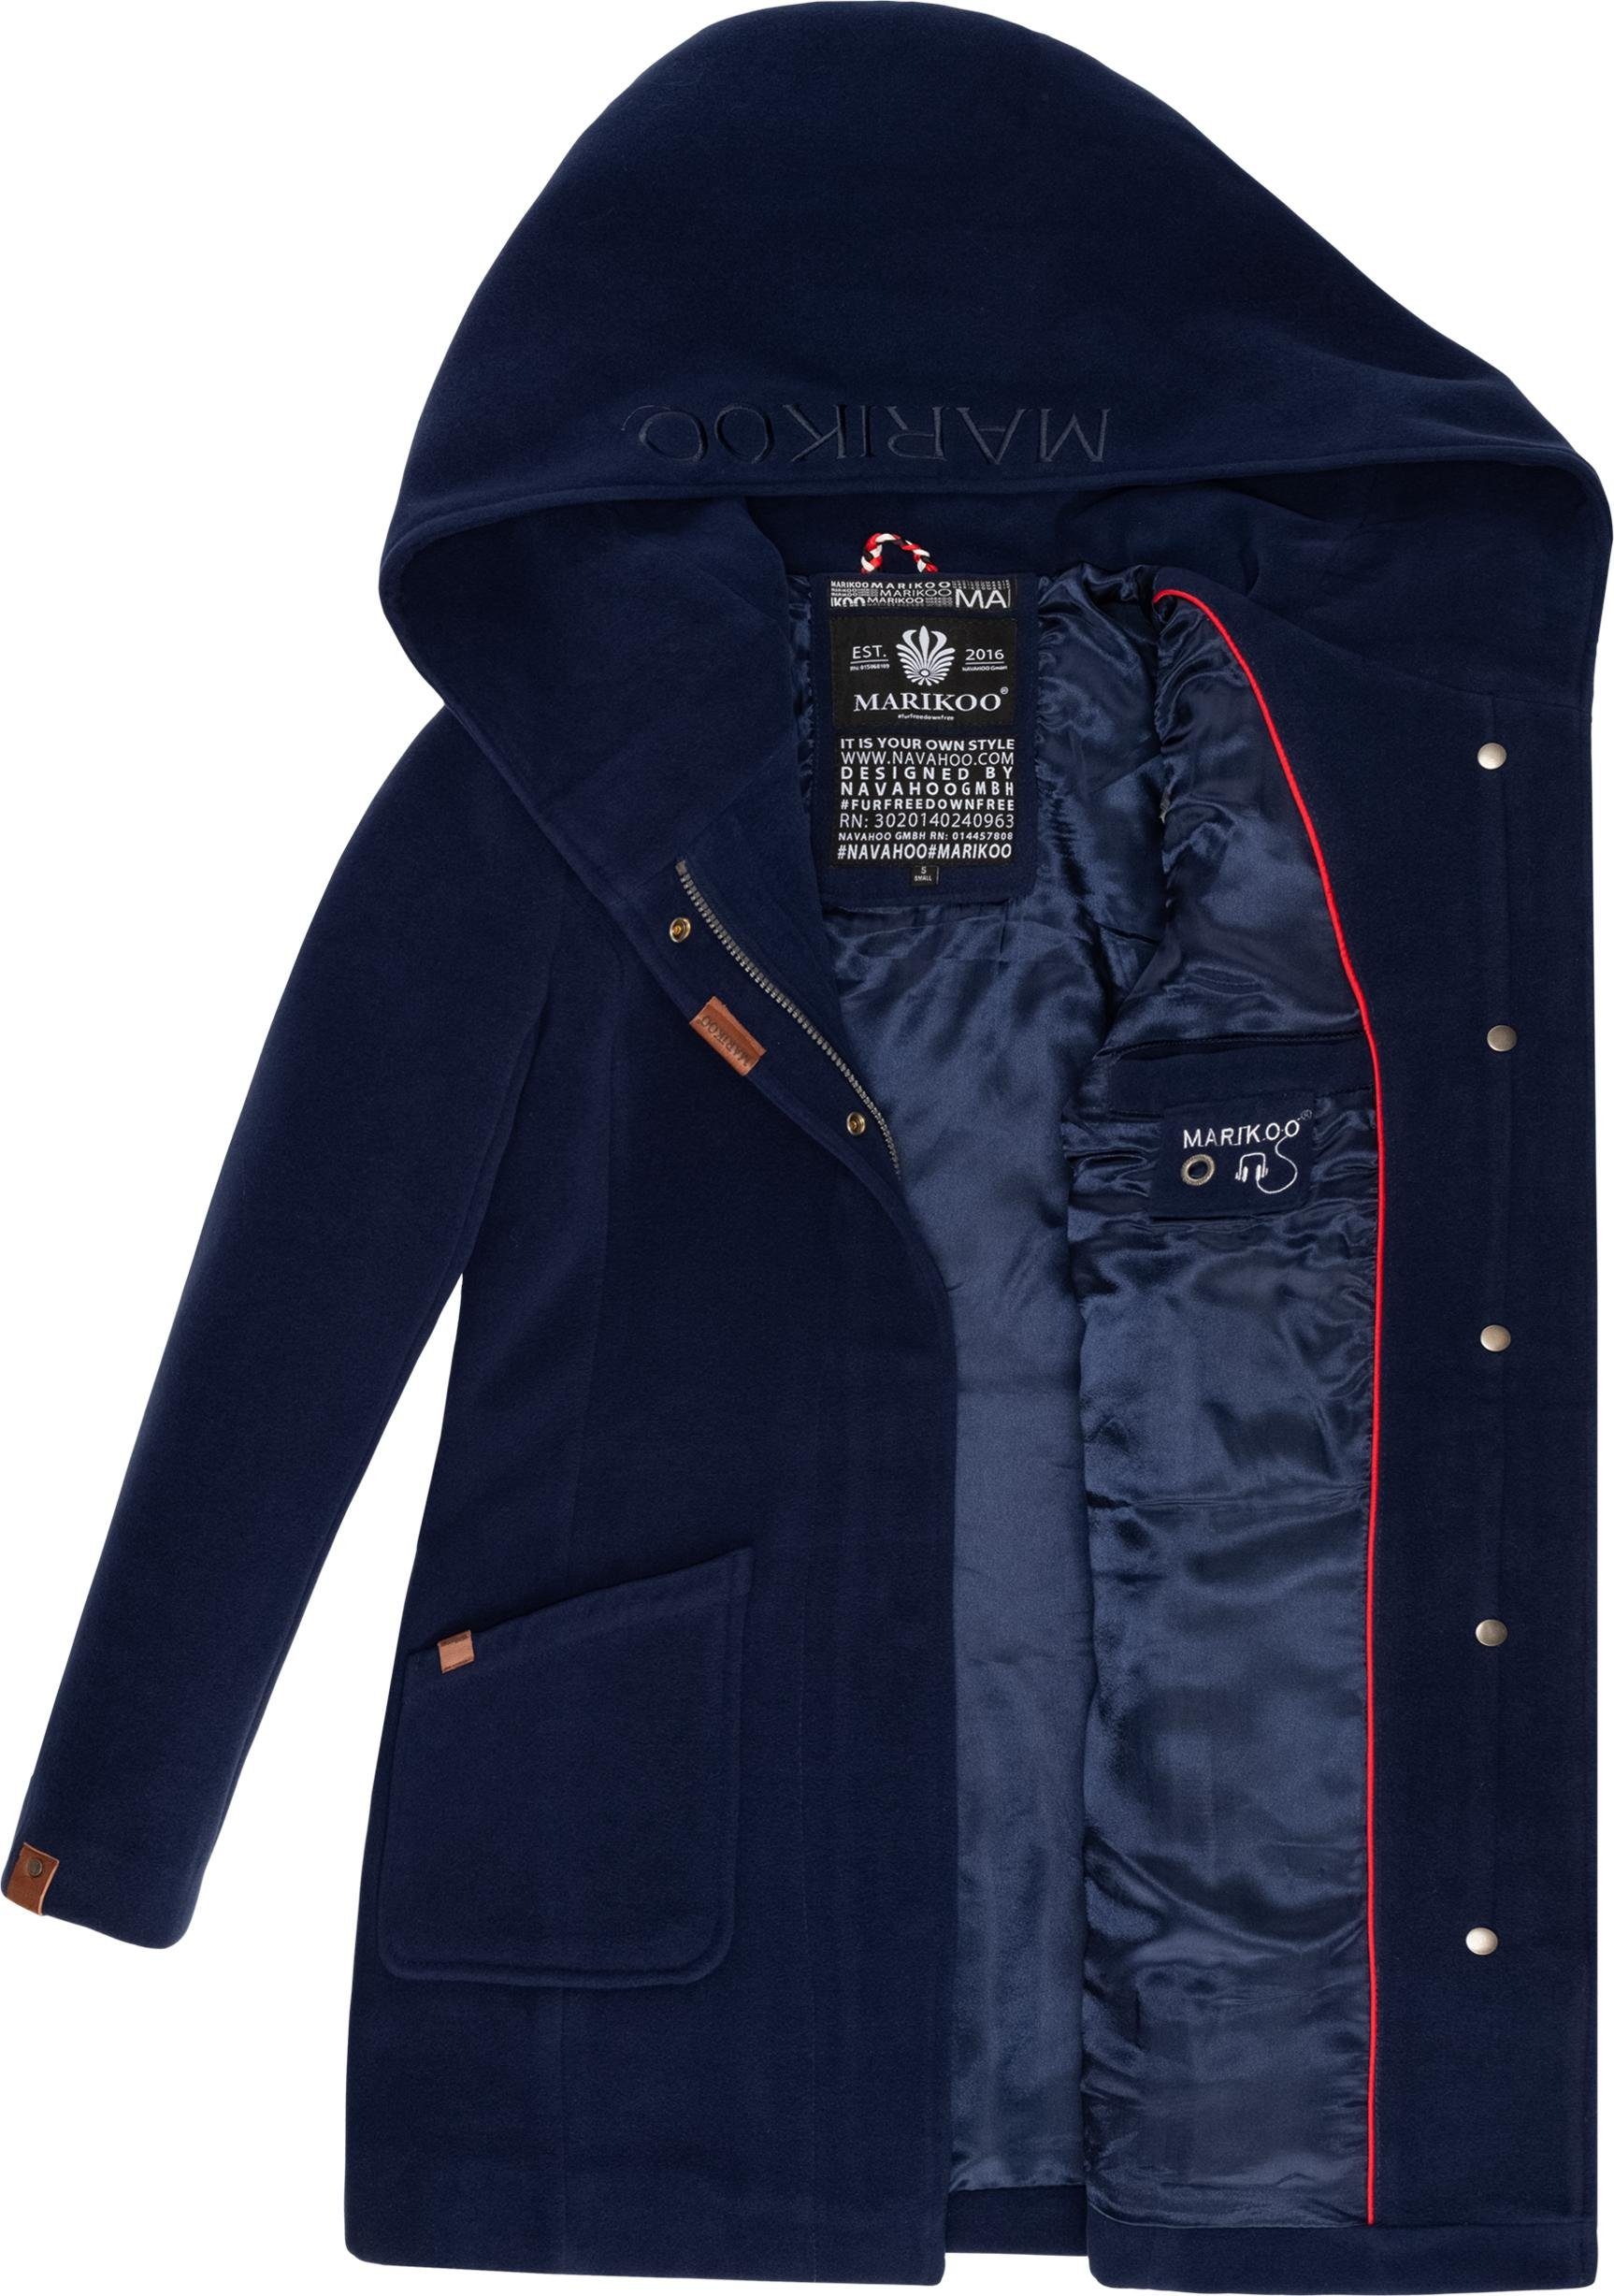 Maikoo navy großer Mantel mit Marikoo Kapuze Wintermantel hochwertiger